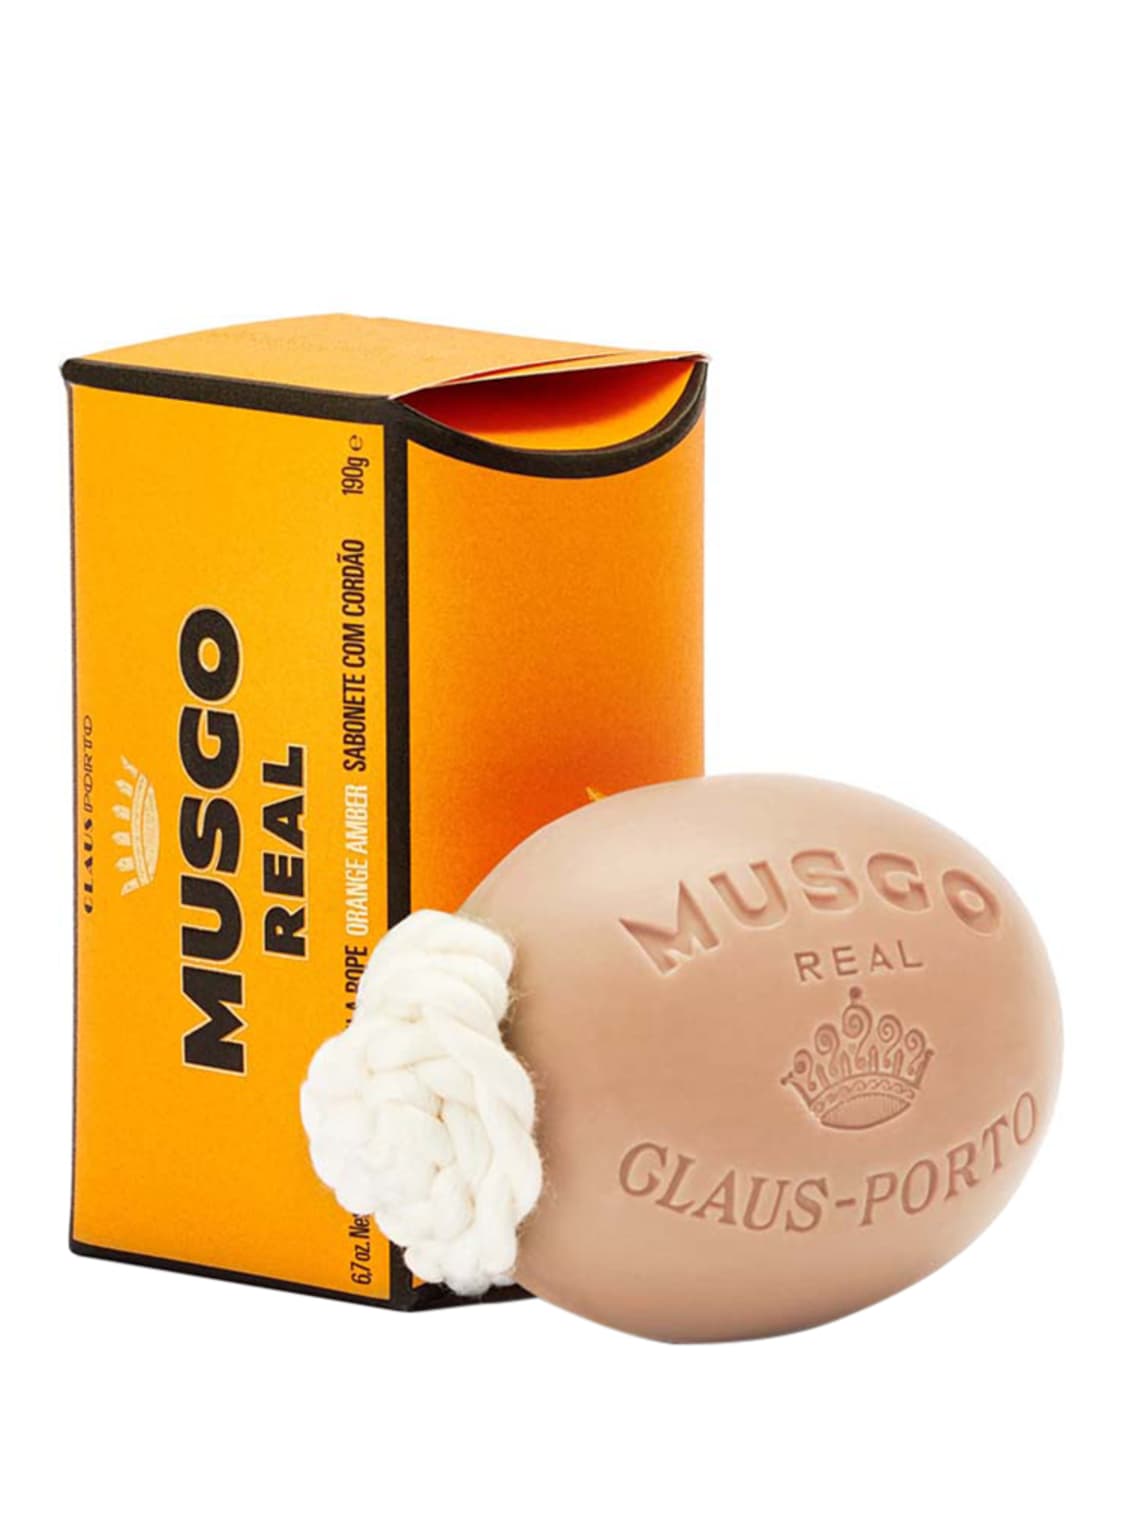 Claus Porto Musgo Real Orange Amber Seife 190 g von CLAUS PORTO